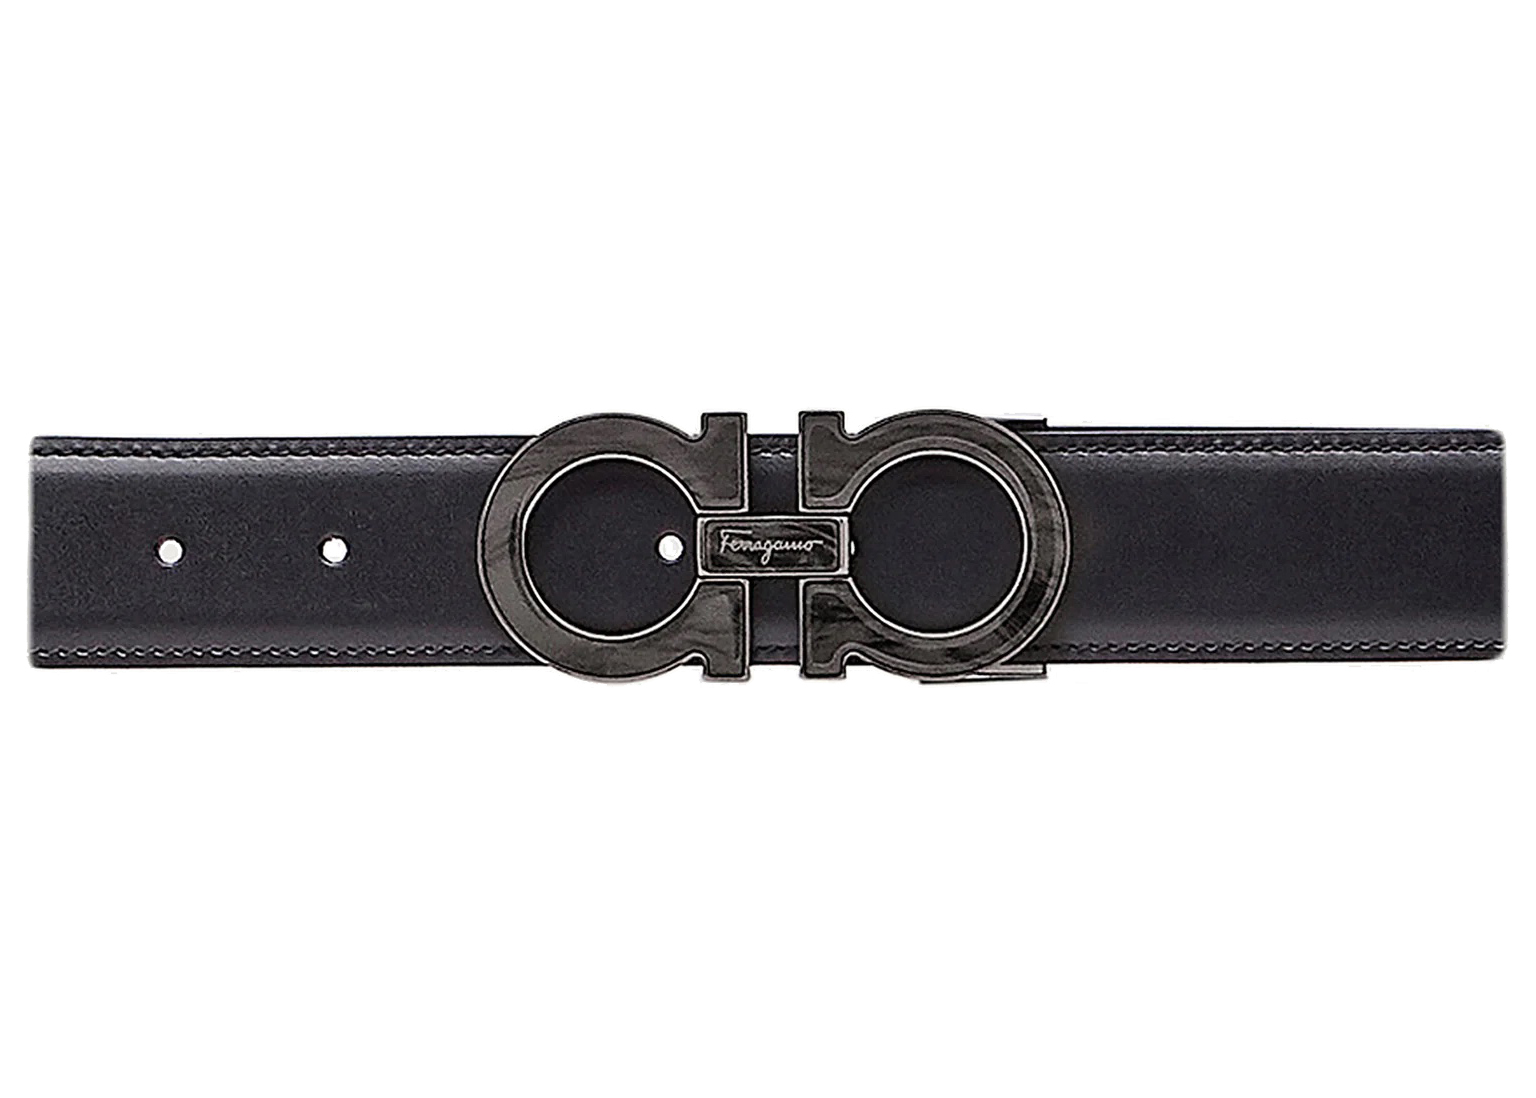 Ferragamo Adjustable Gancini Belt Black in Calfskin Leather - US